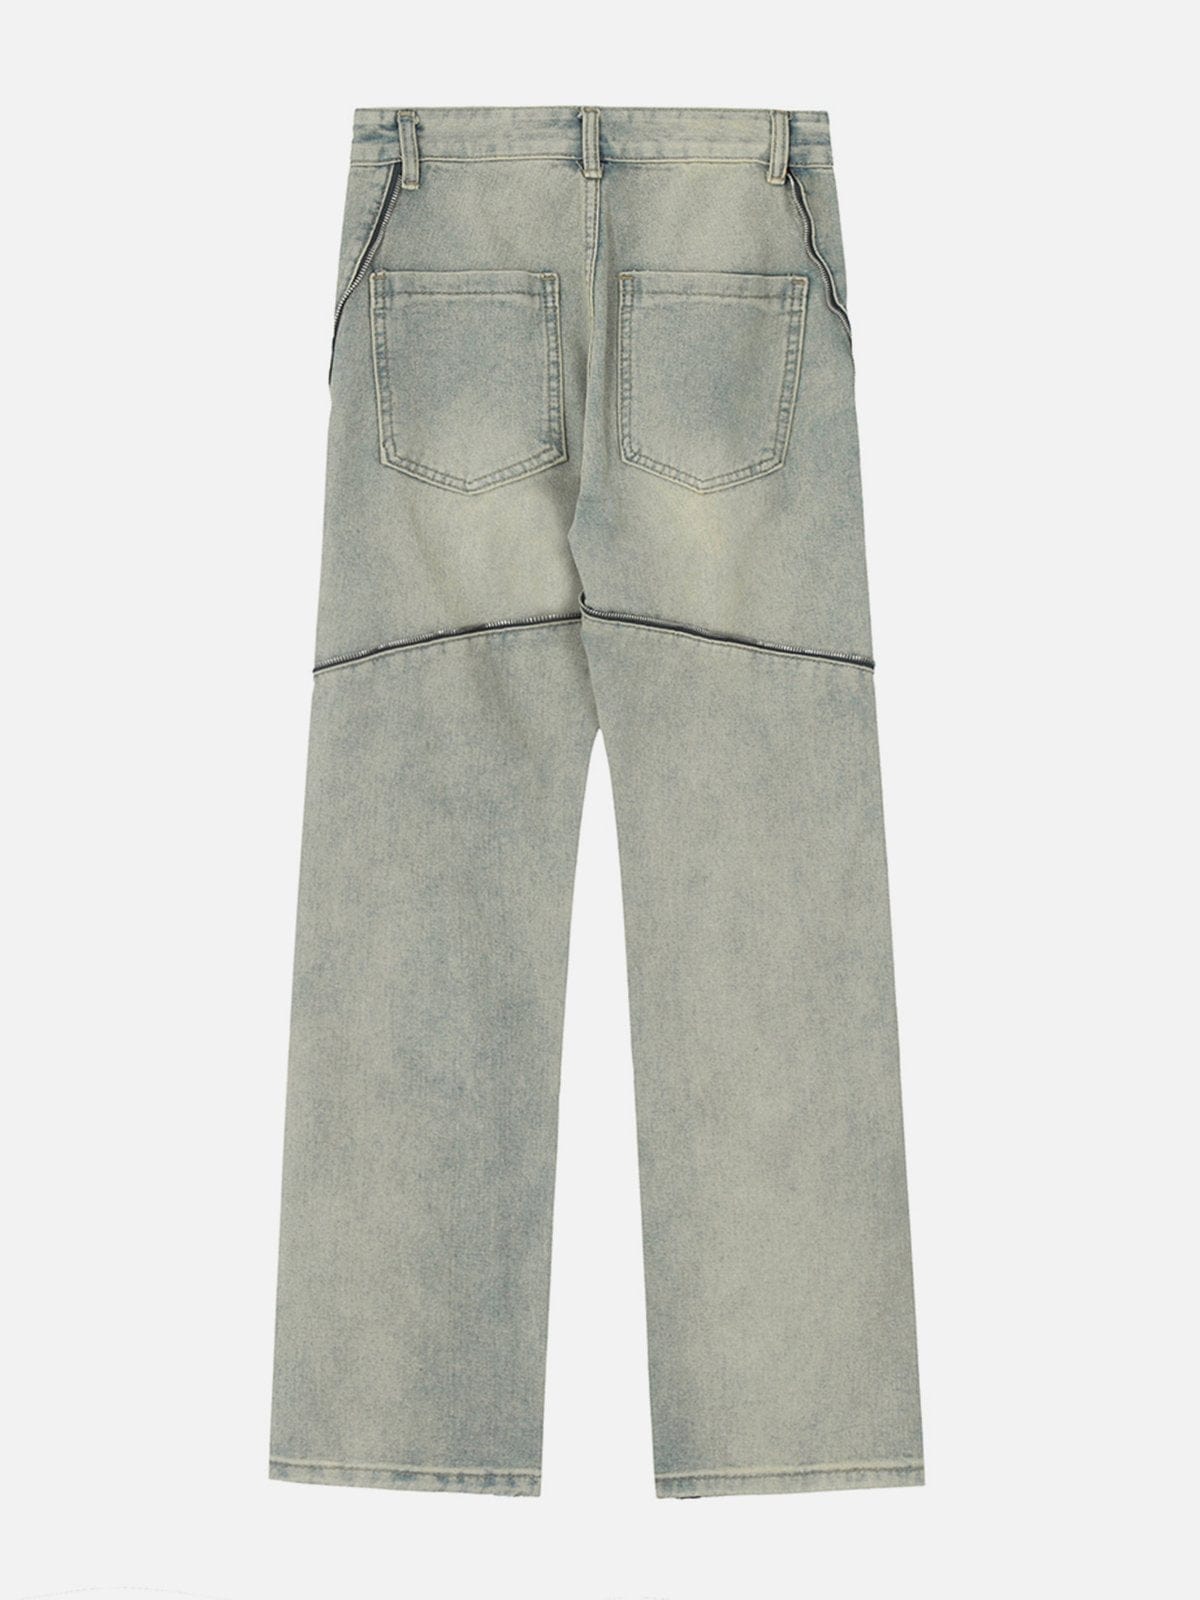 NEV Symmetrical Multi-Zip Deconstructed Jeans